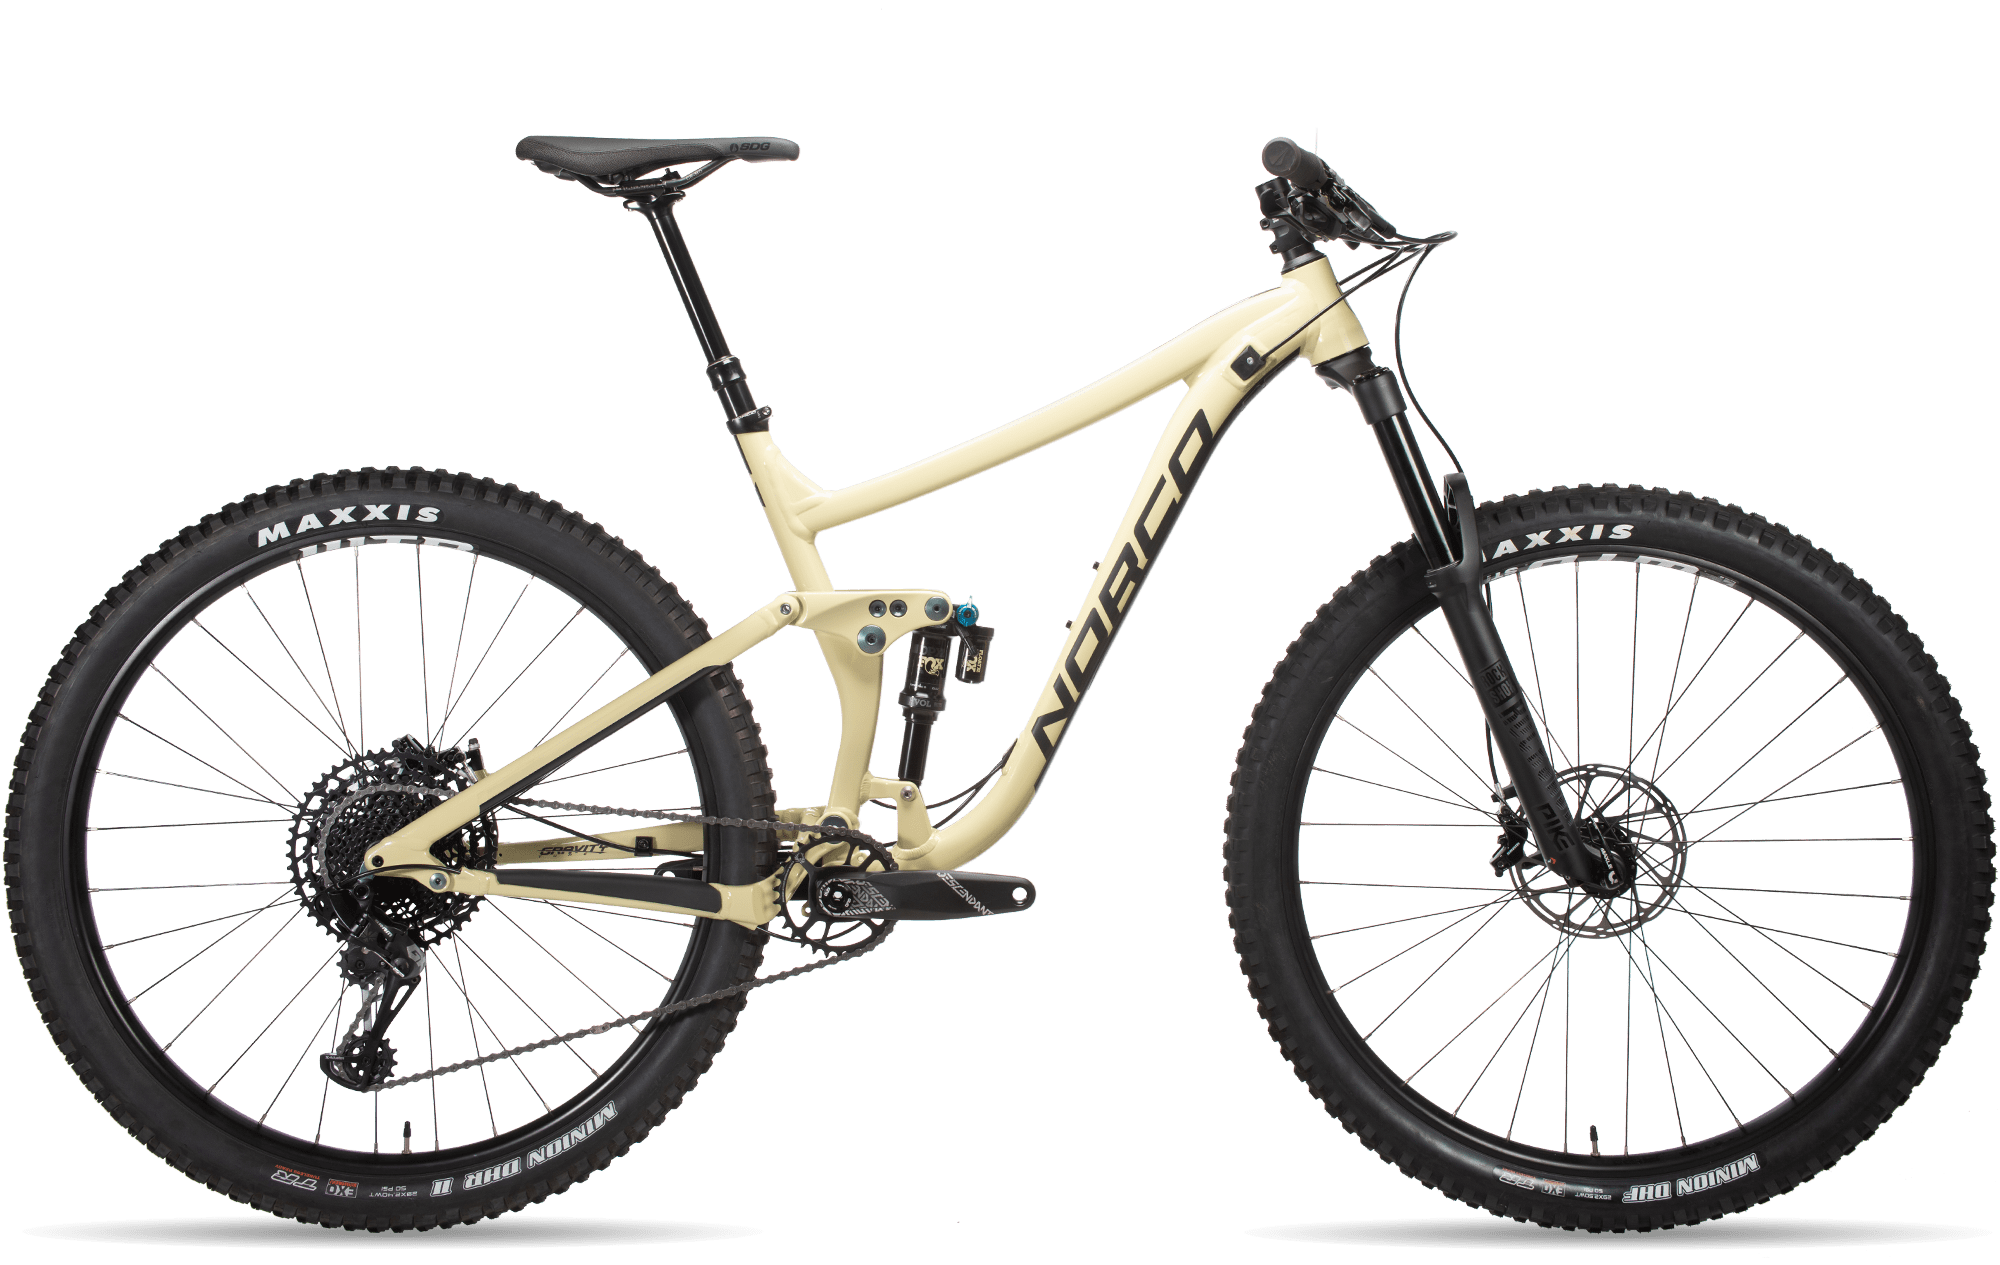 keysto 21 gear cycle price